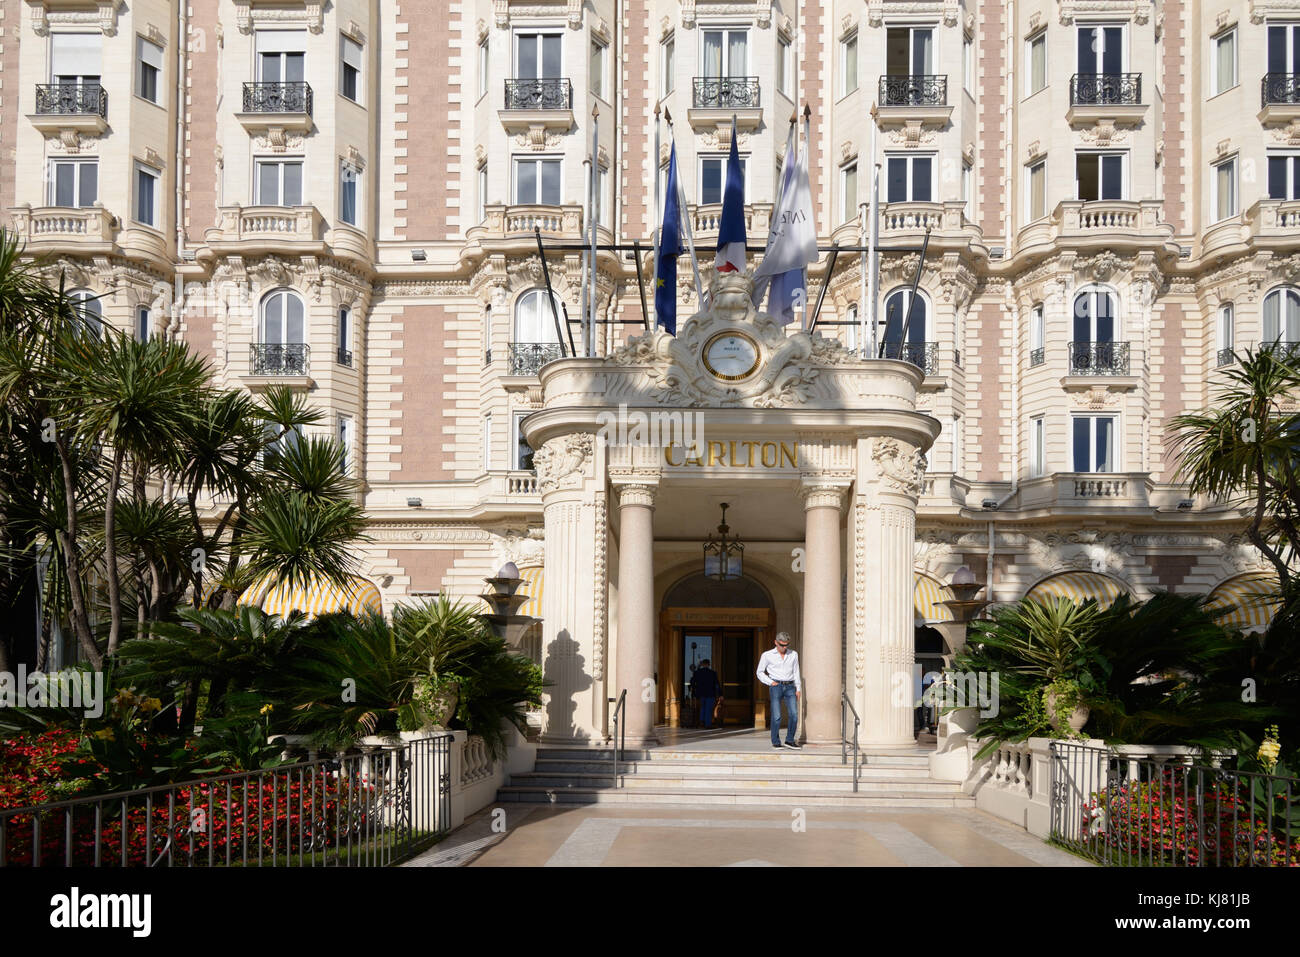 Eingang zum Luxus InterContinental Carlton Hotel, erbaut 1911, am Boulevard de la Croisette, Cannes, Alpes-Maritimes, Frankreich Stockfoto